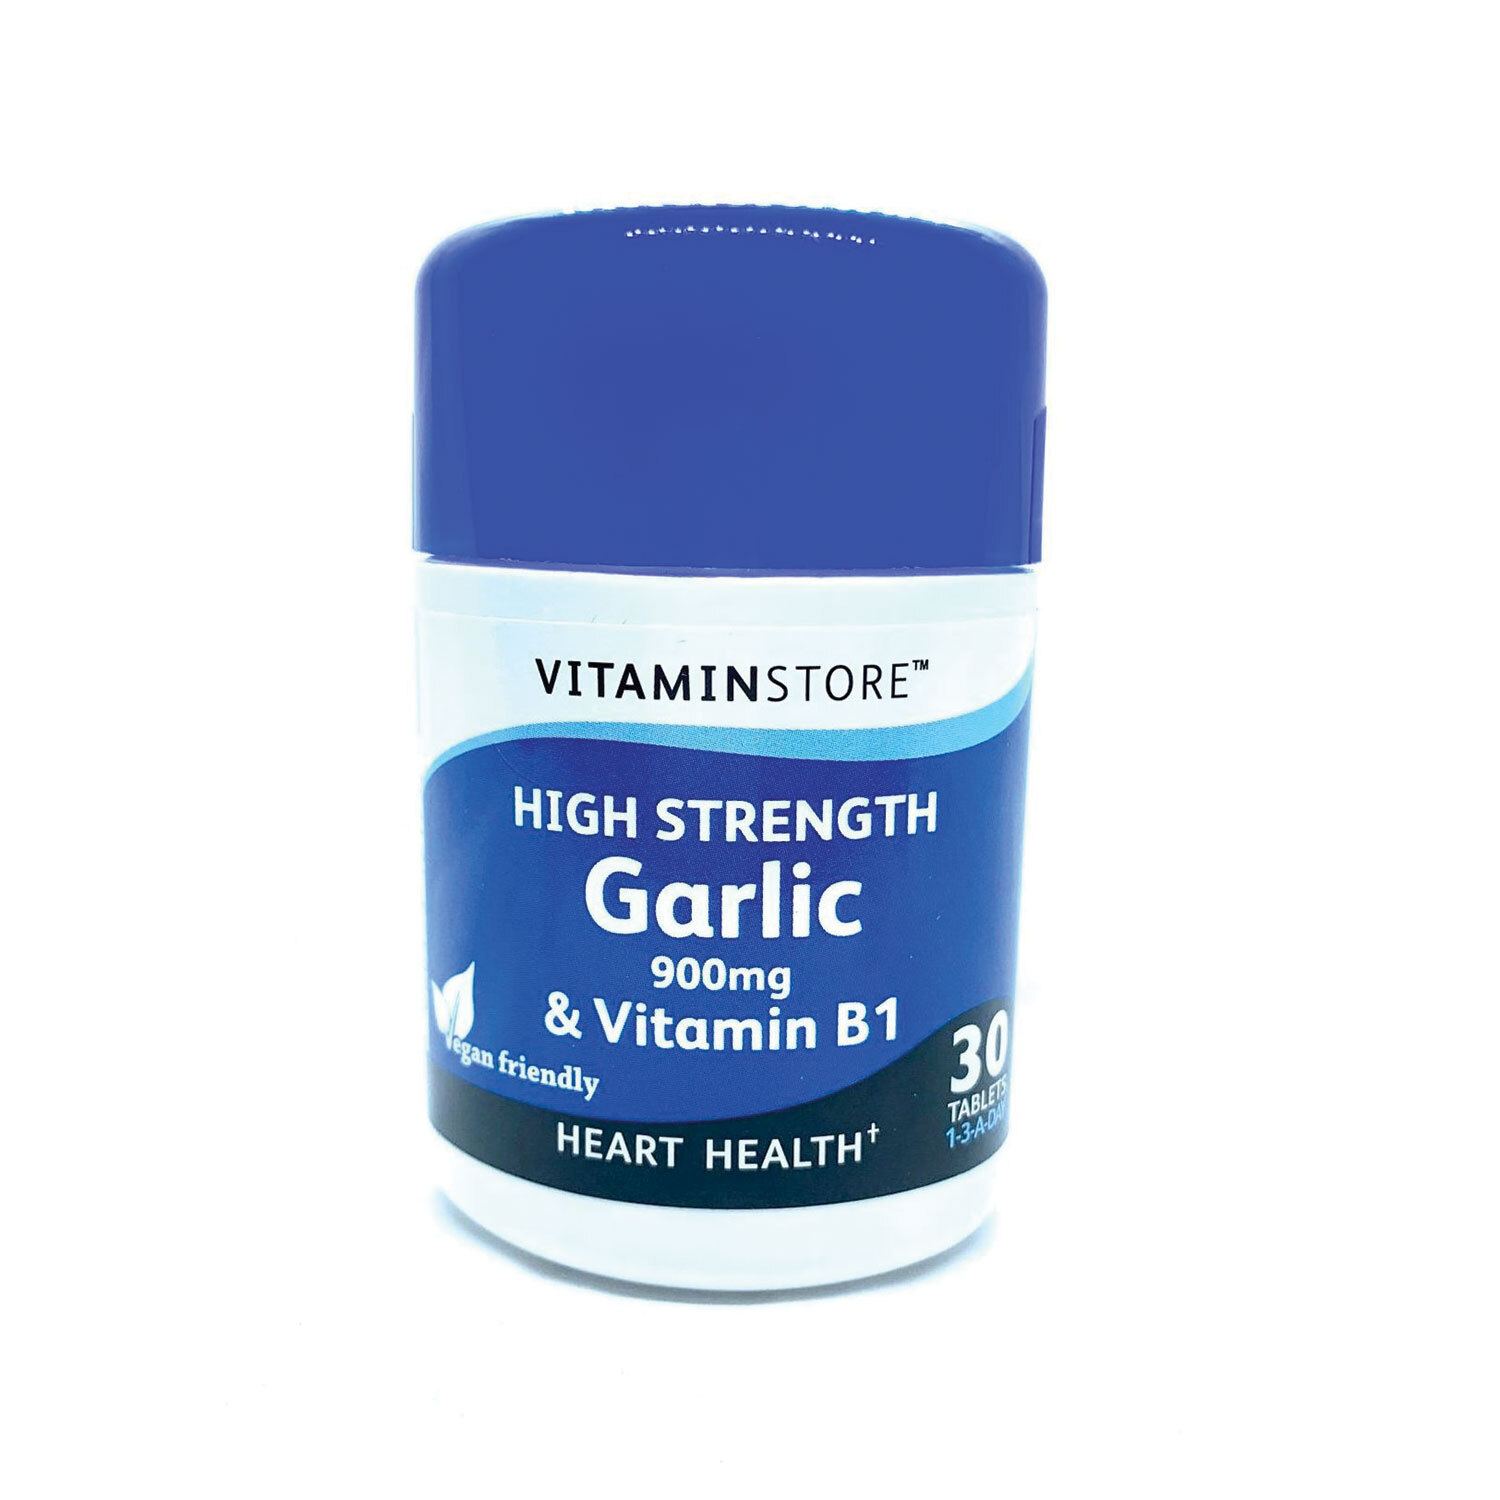 High Strength Garlic Tablets Image